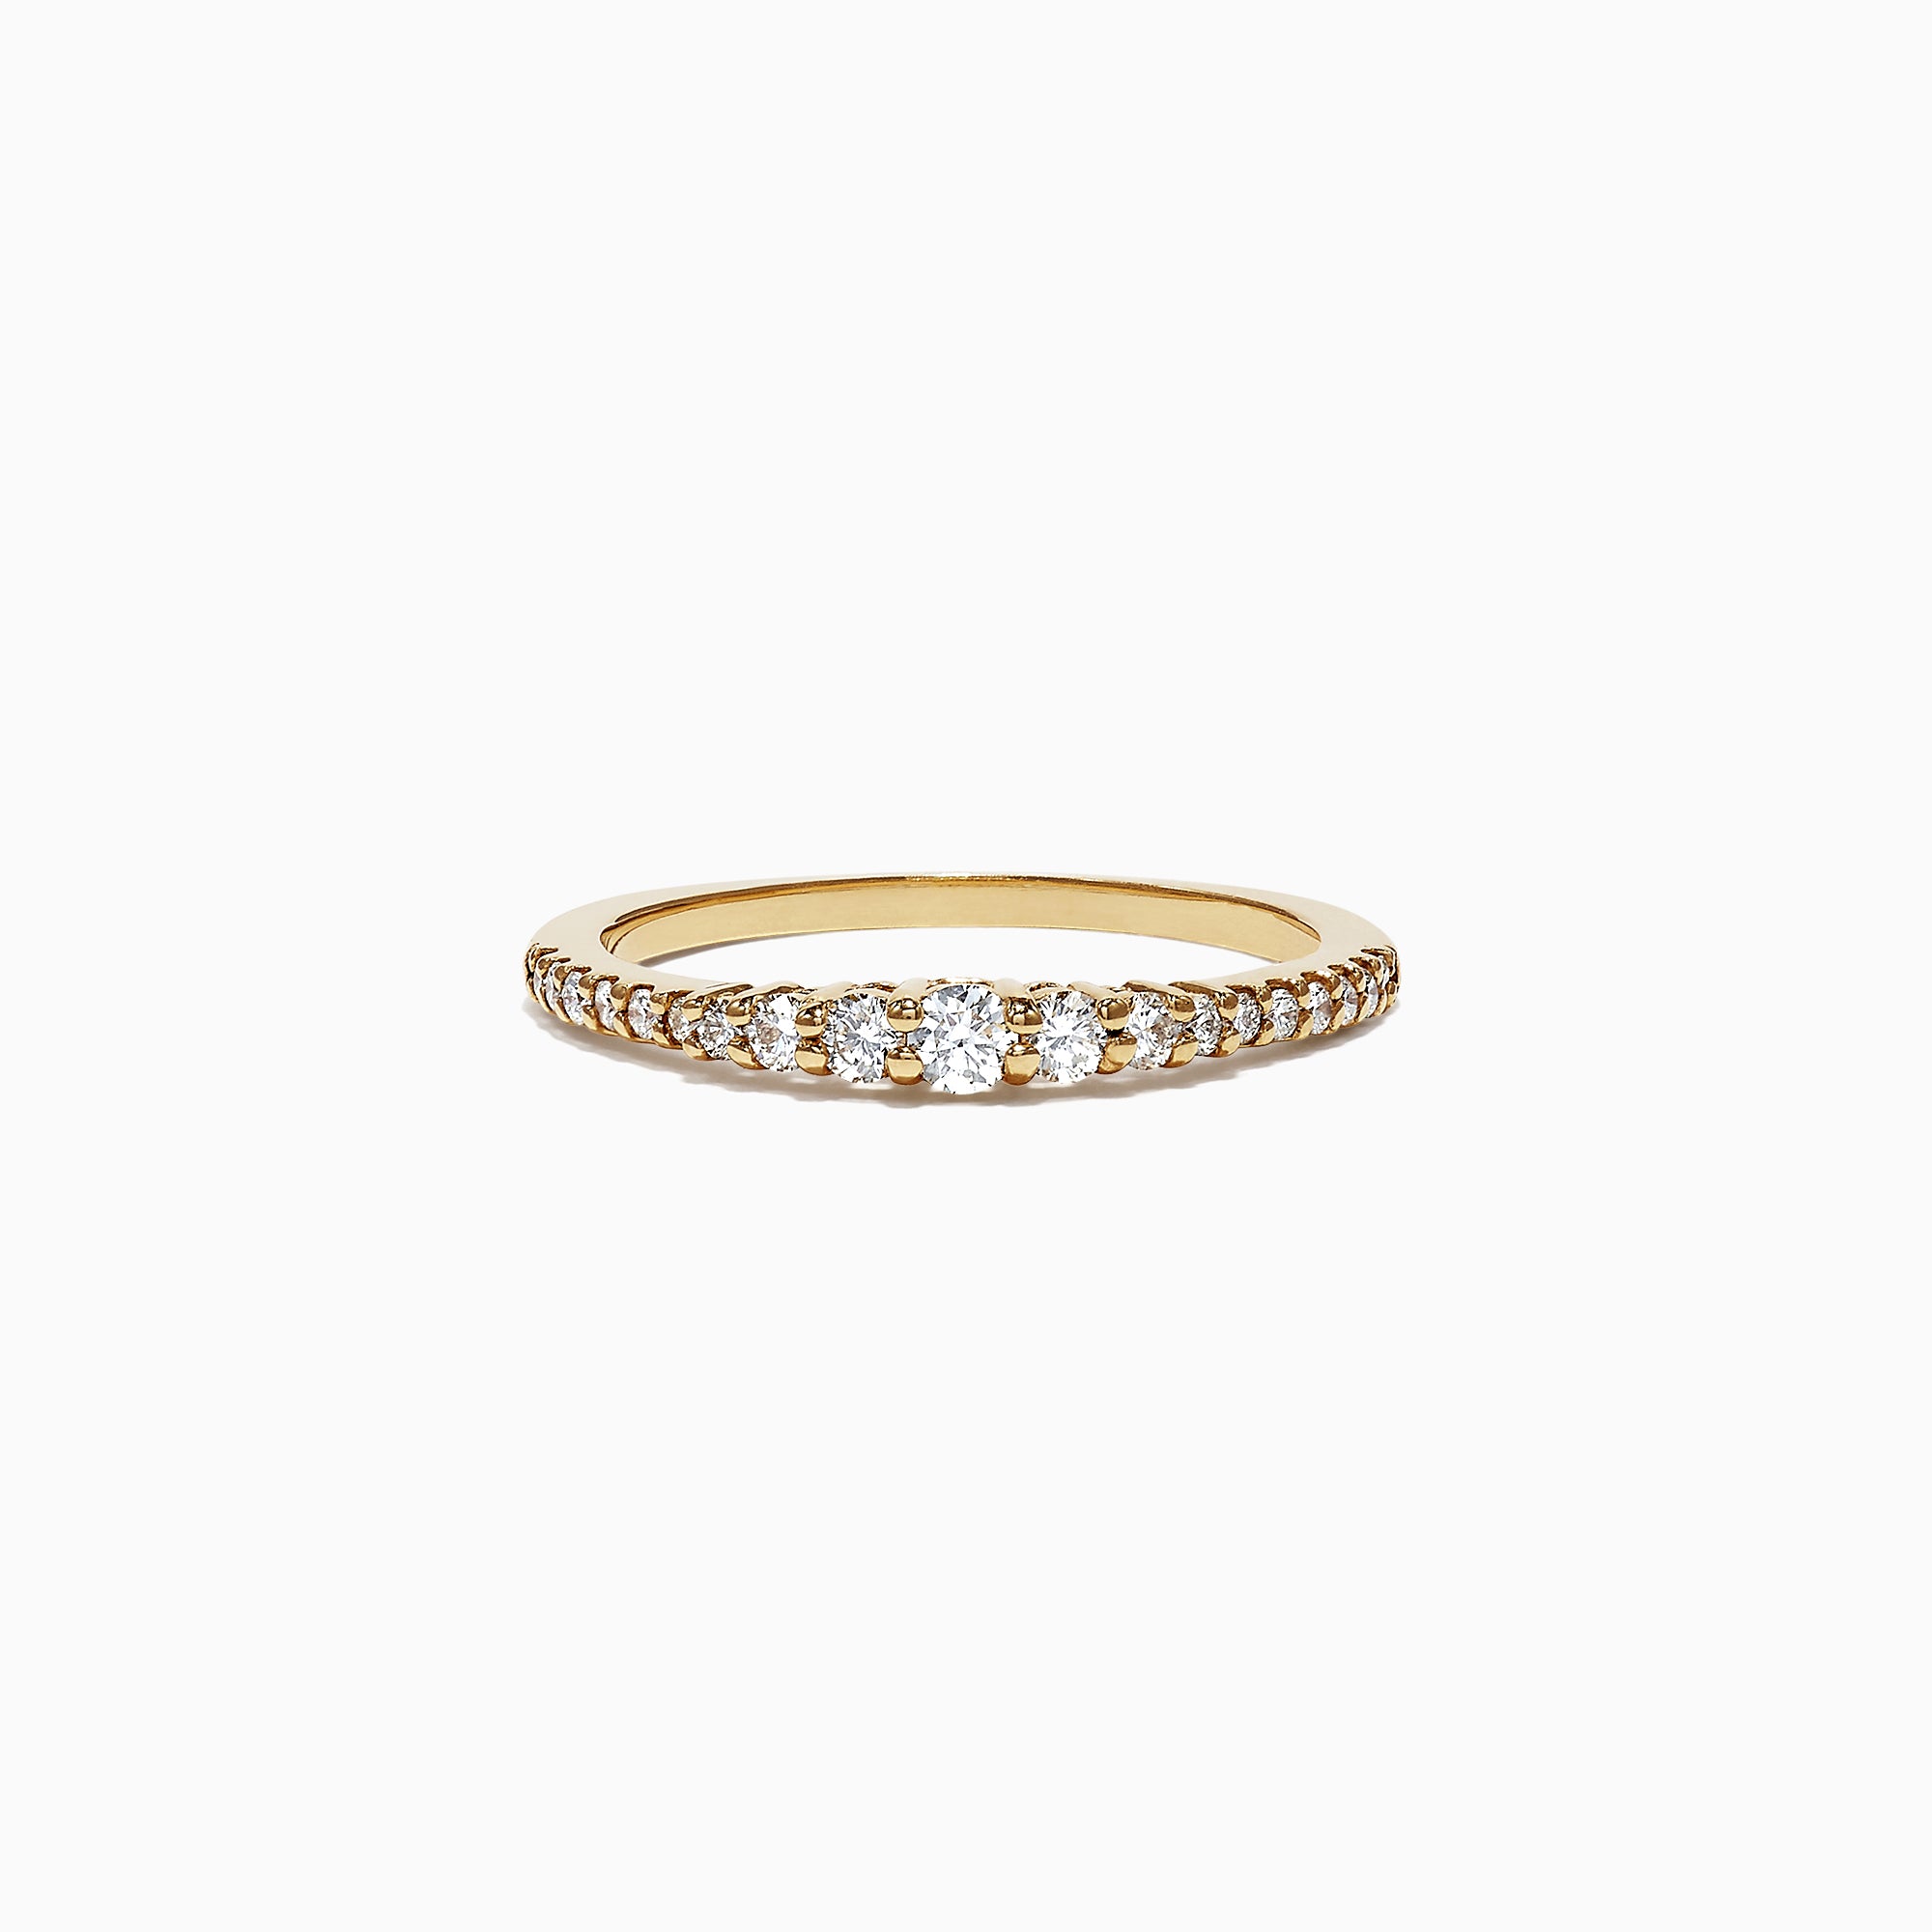 Effy Pave Classica 14K Yellow Gold Diamond Band Ring, 0.31 TCW